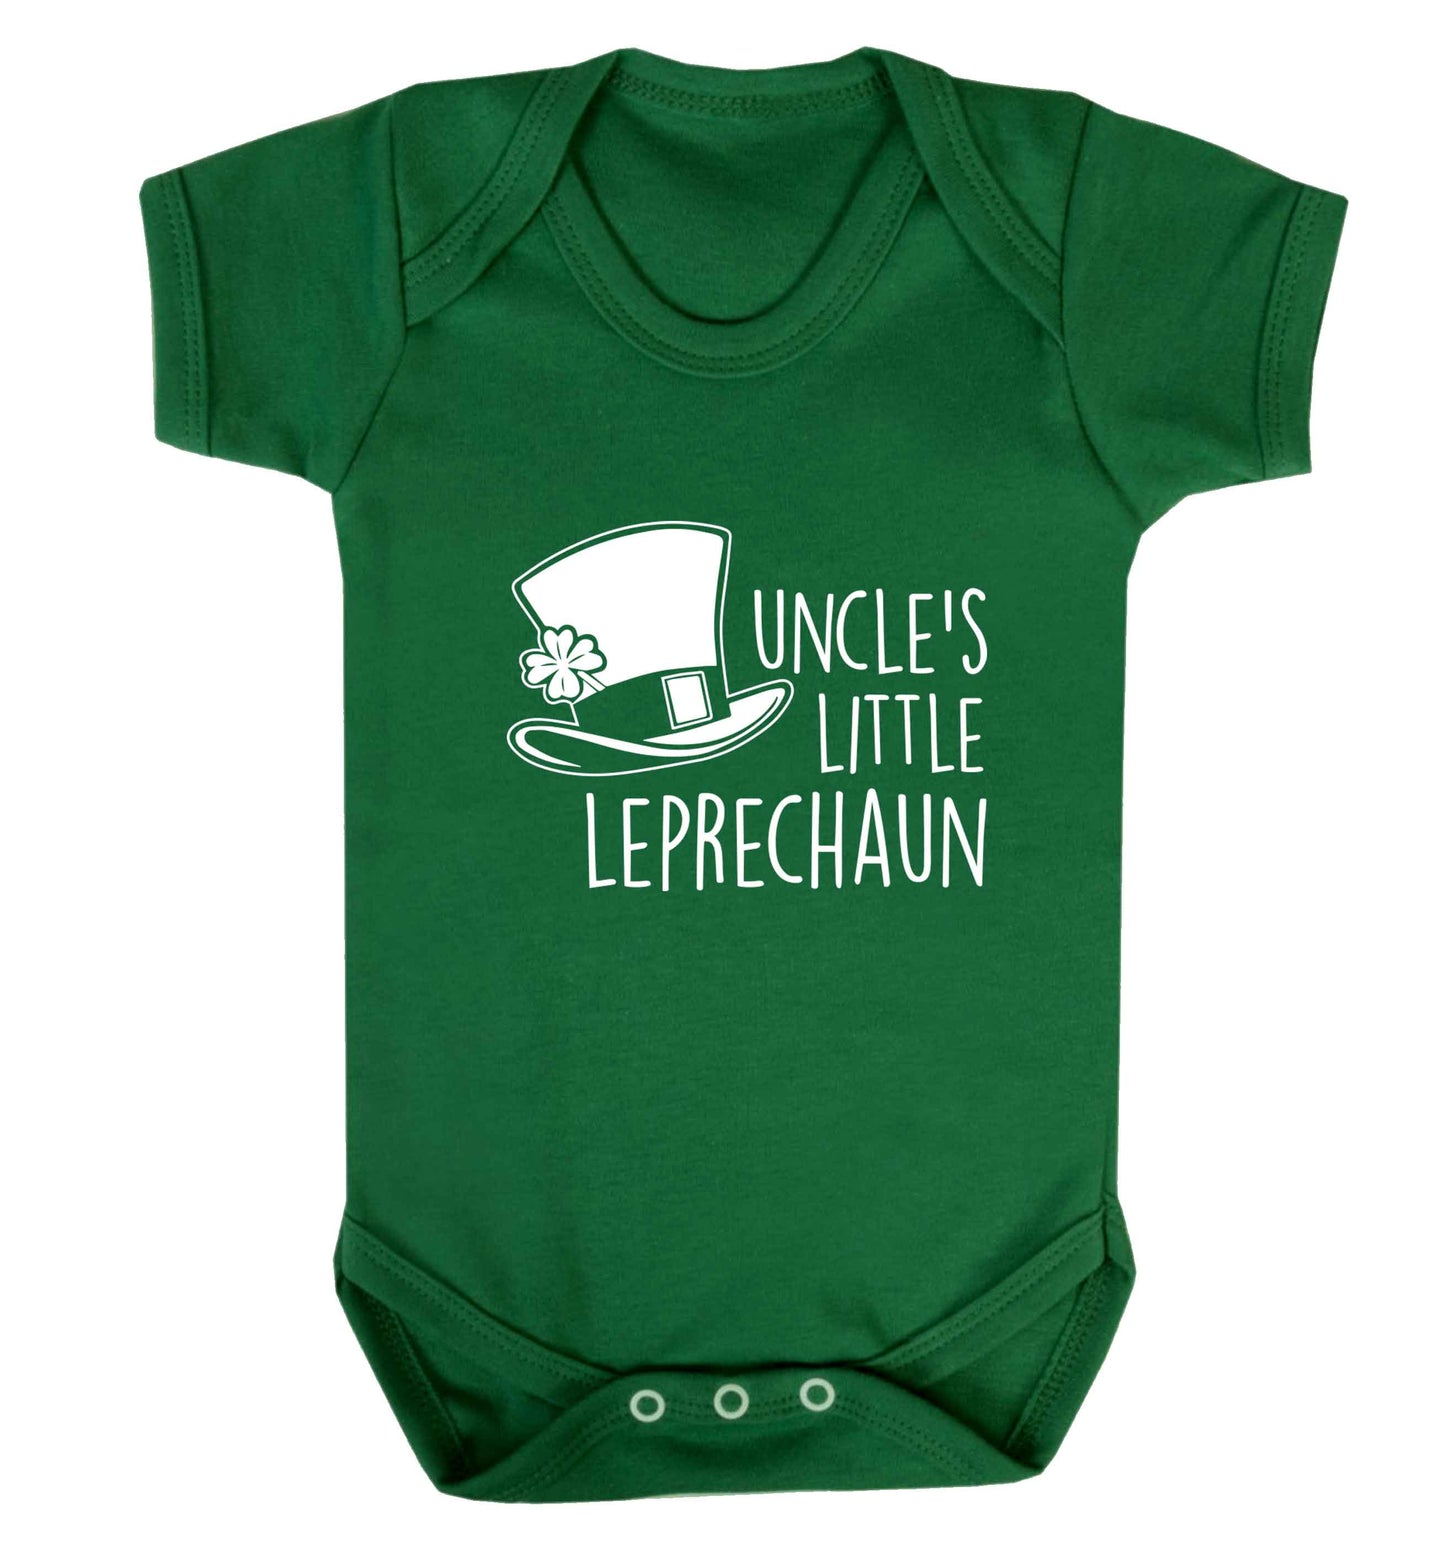 Uncles little leprechaun baby vest green 18-24 months